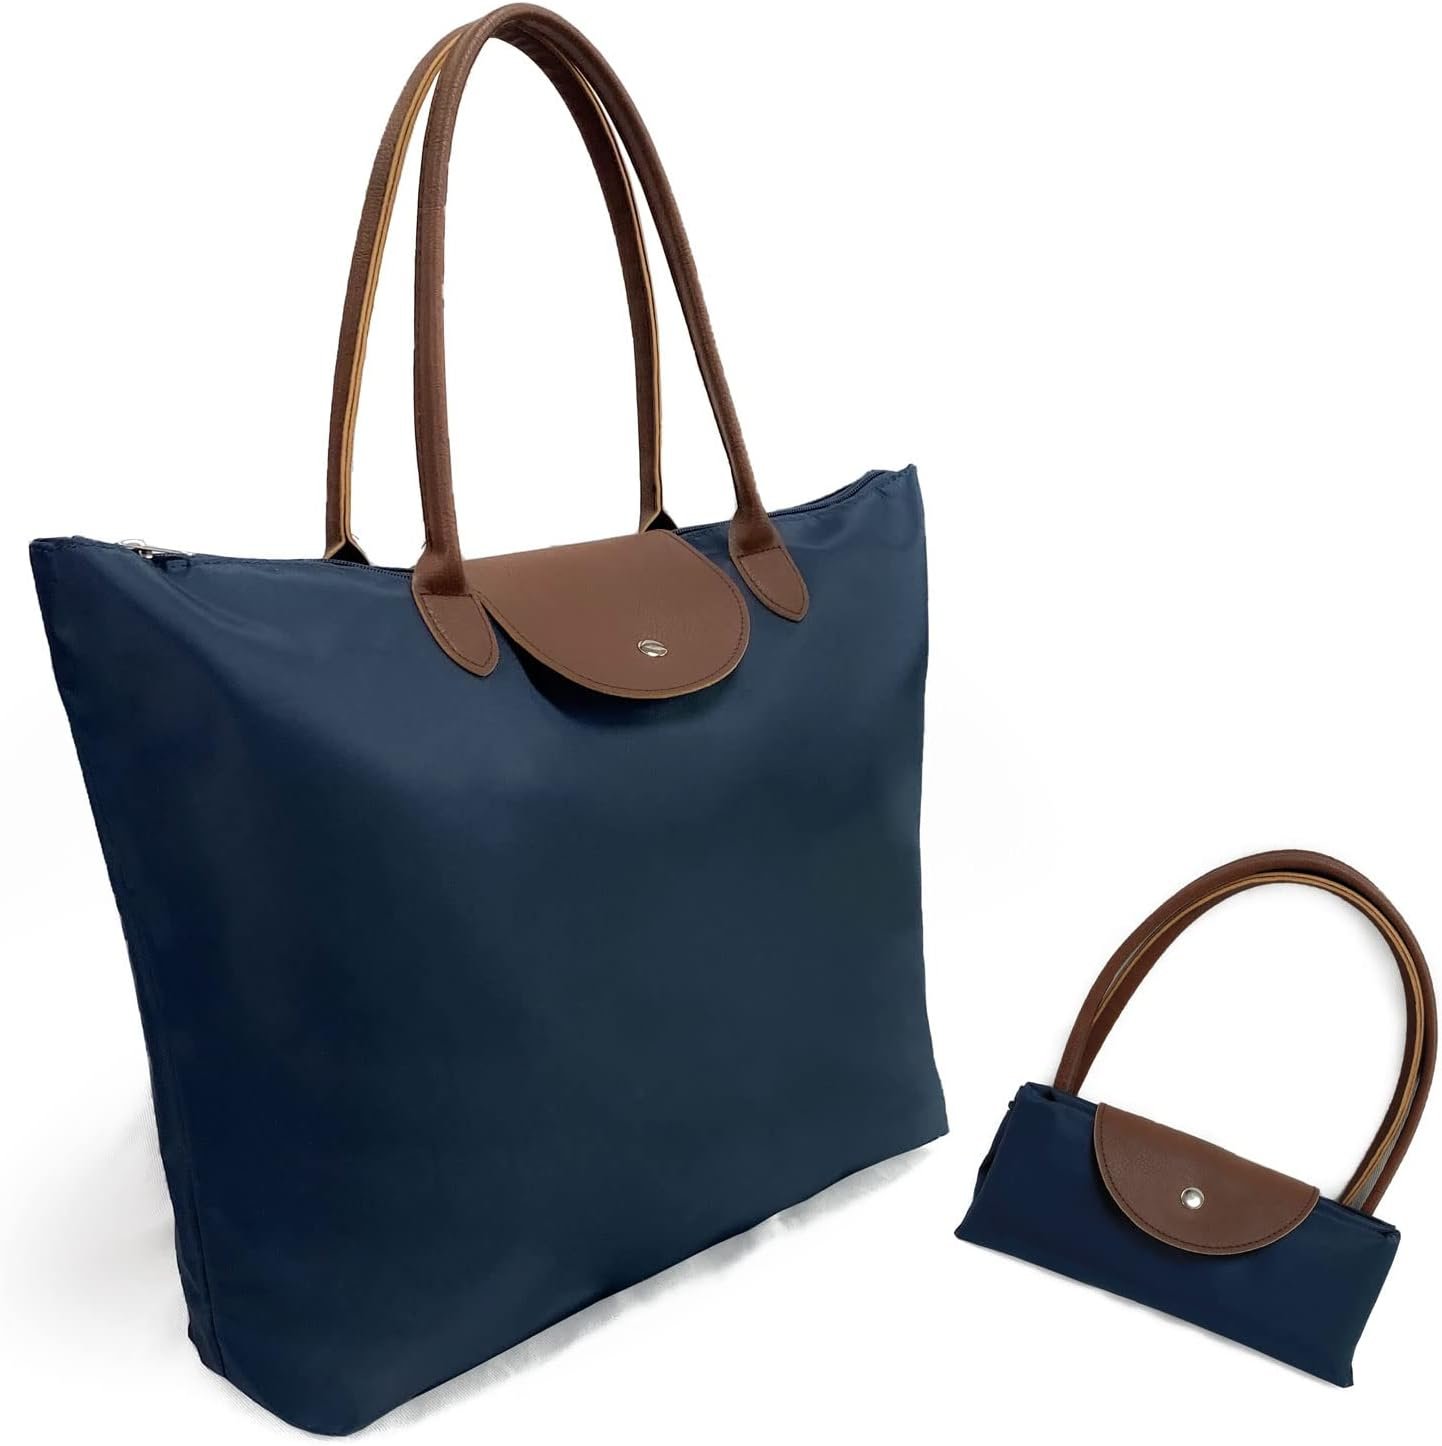 Tote Top Handle Bag,Lightweight Packable Stylish Handbag Foldable Zipper Travel shoulder Bag for Women -Navy